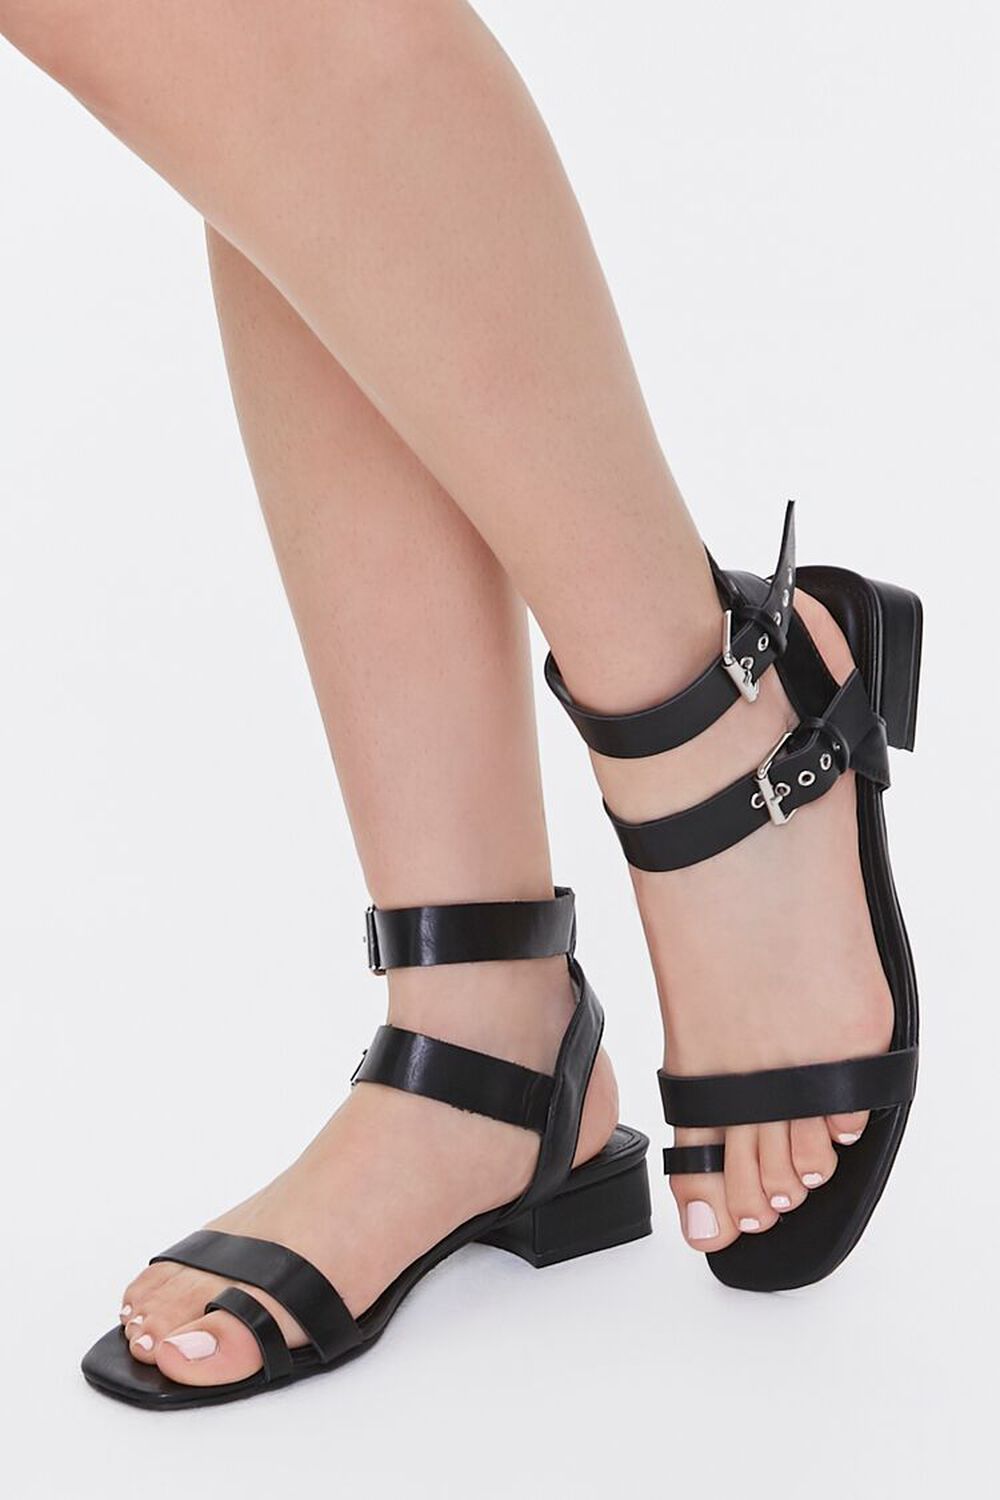 BLACK Caged Block Heel Sandals, image 1